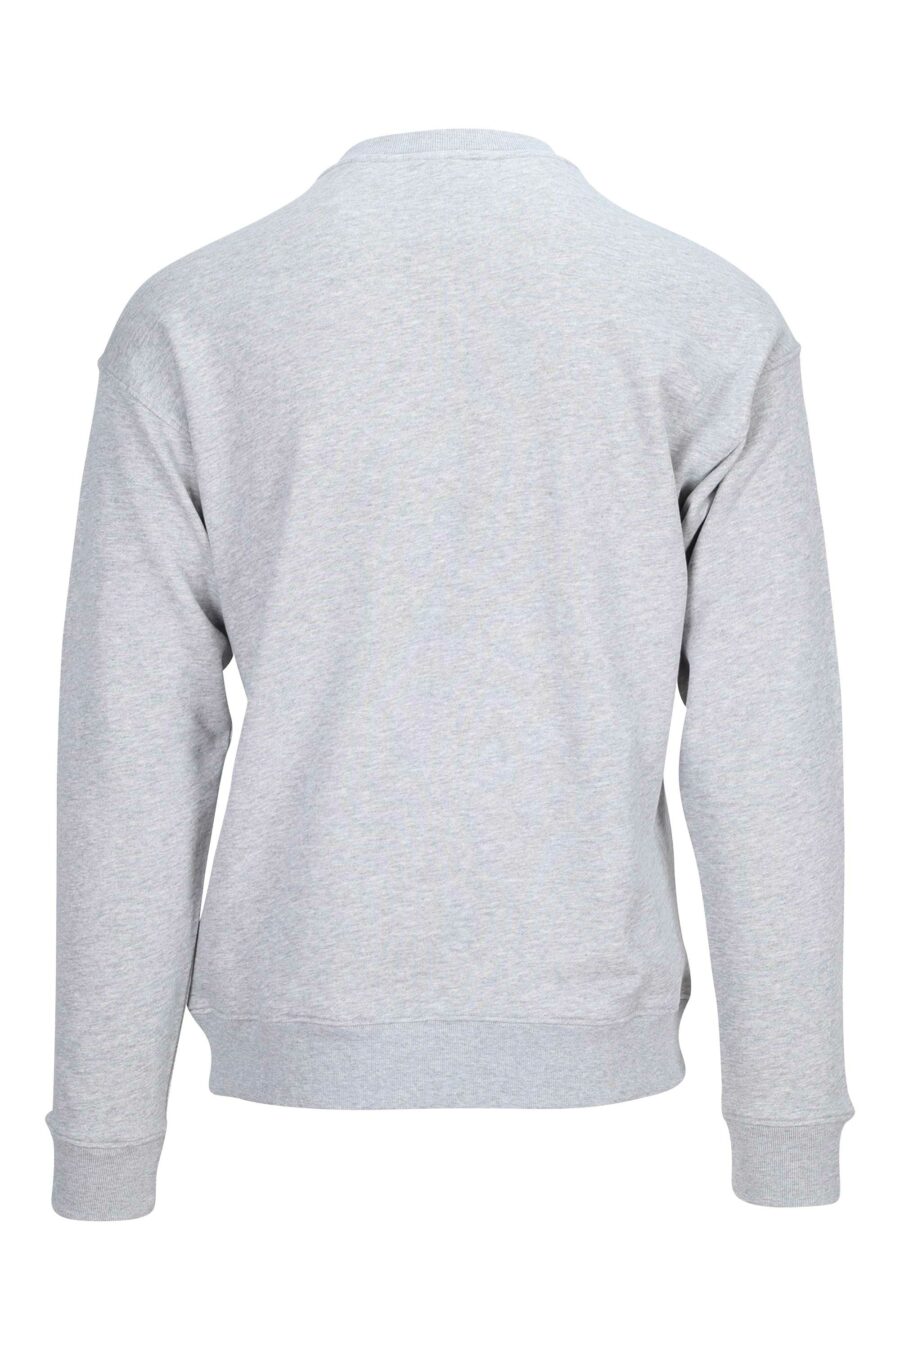 Grey sweatshirt with maxilogue "couture milano" - 889316944785 1